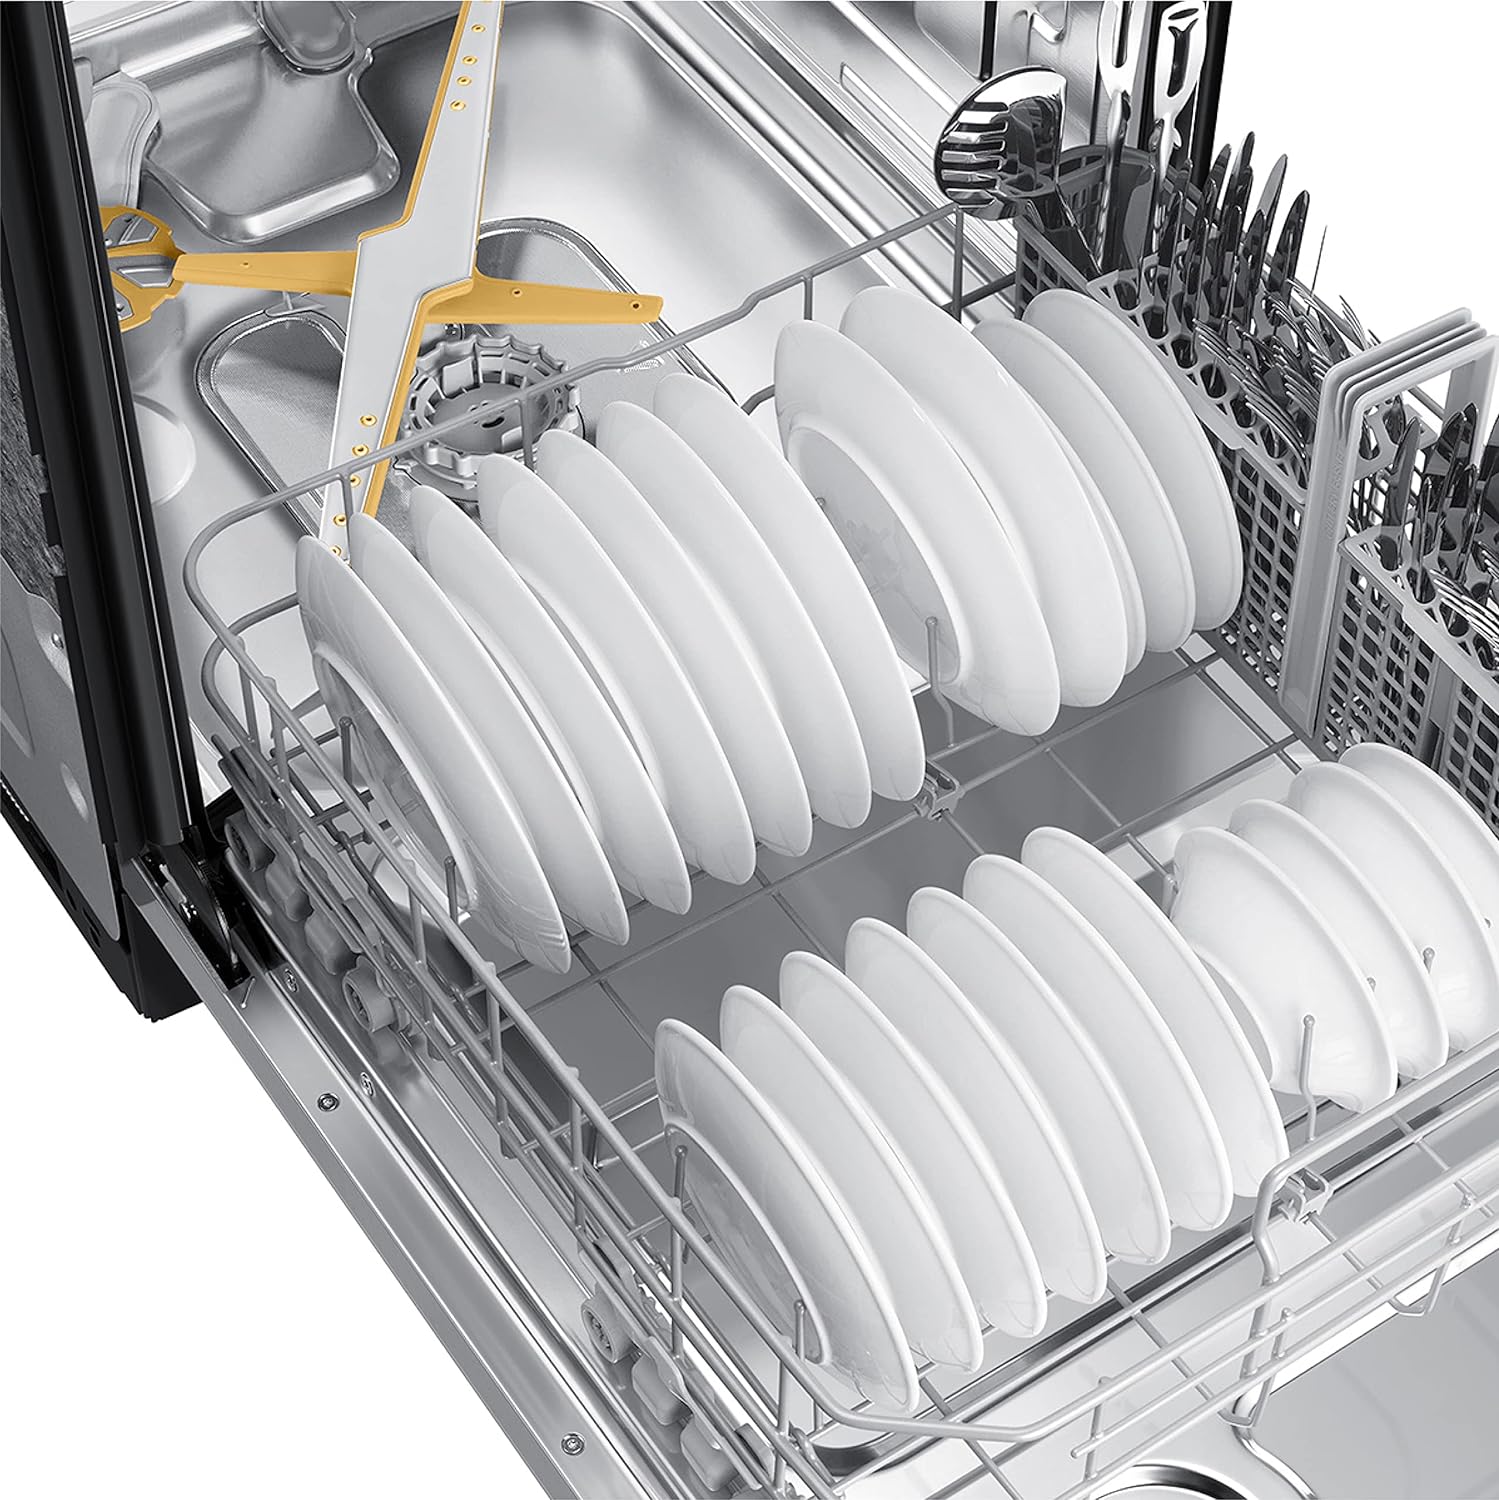 SAMSUNG Smart 44dBA Dishwasher Review